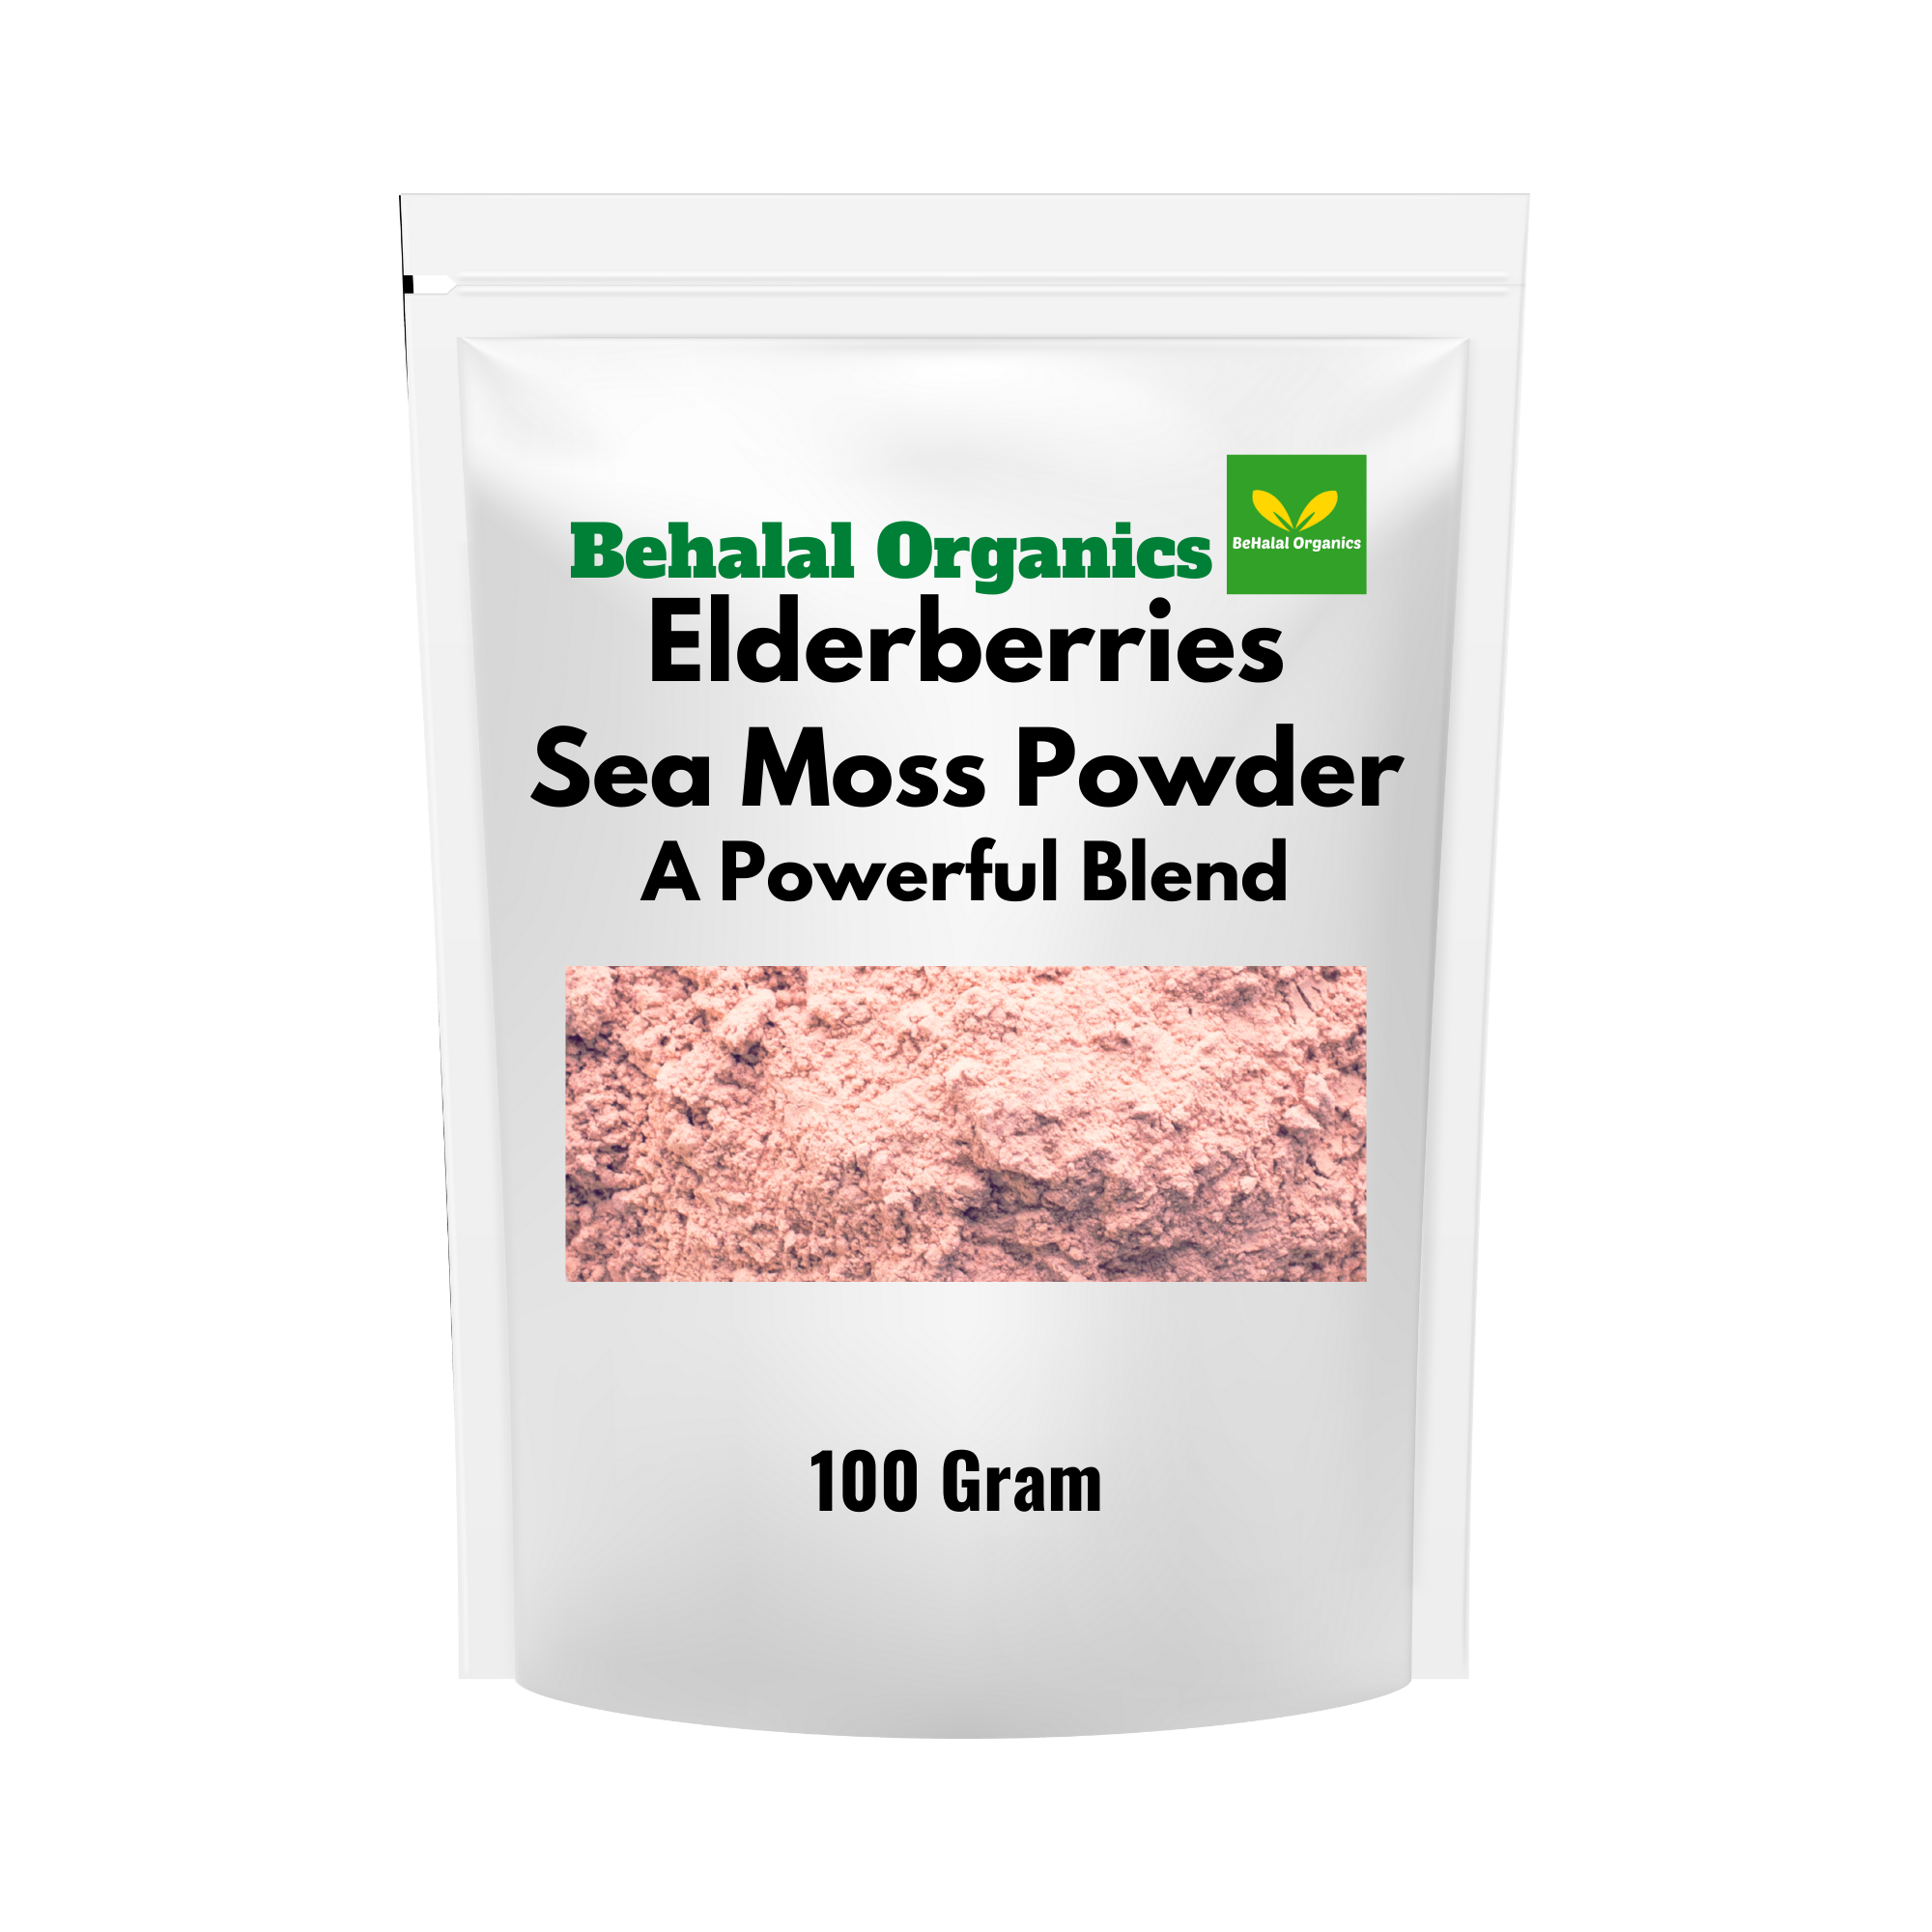 Sea Moss and Elderberry powder